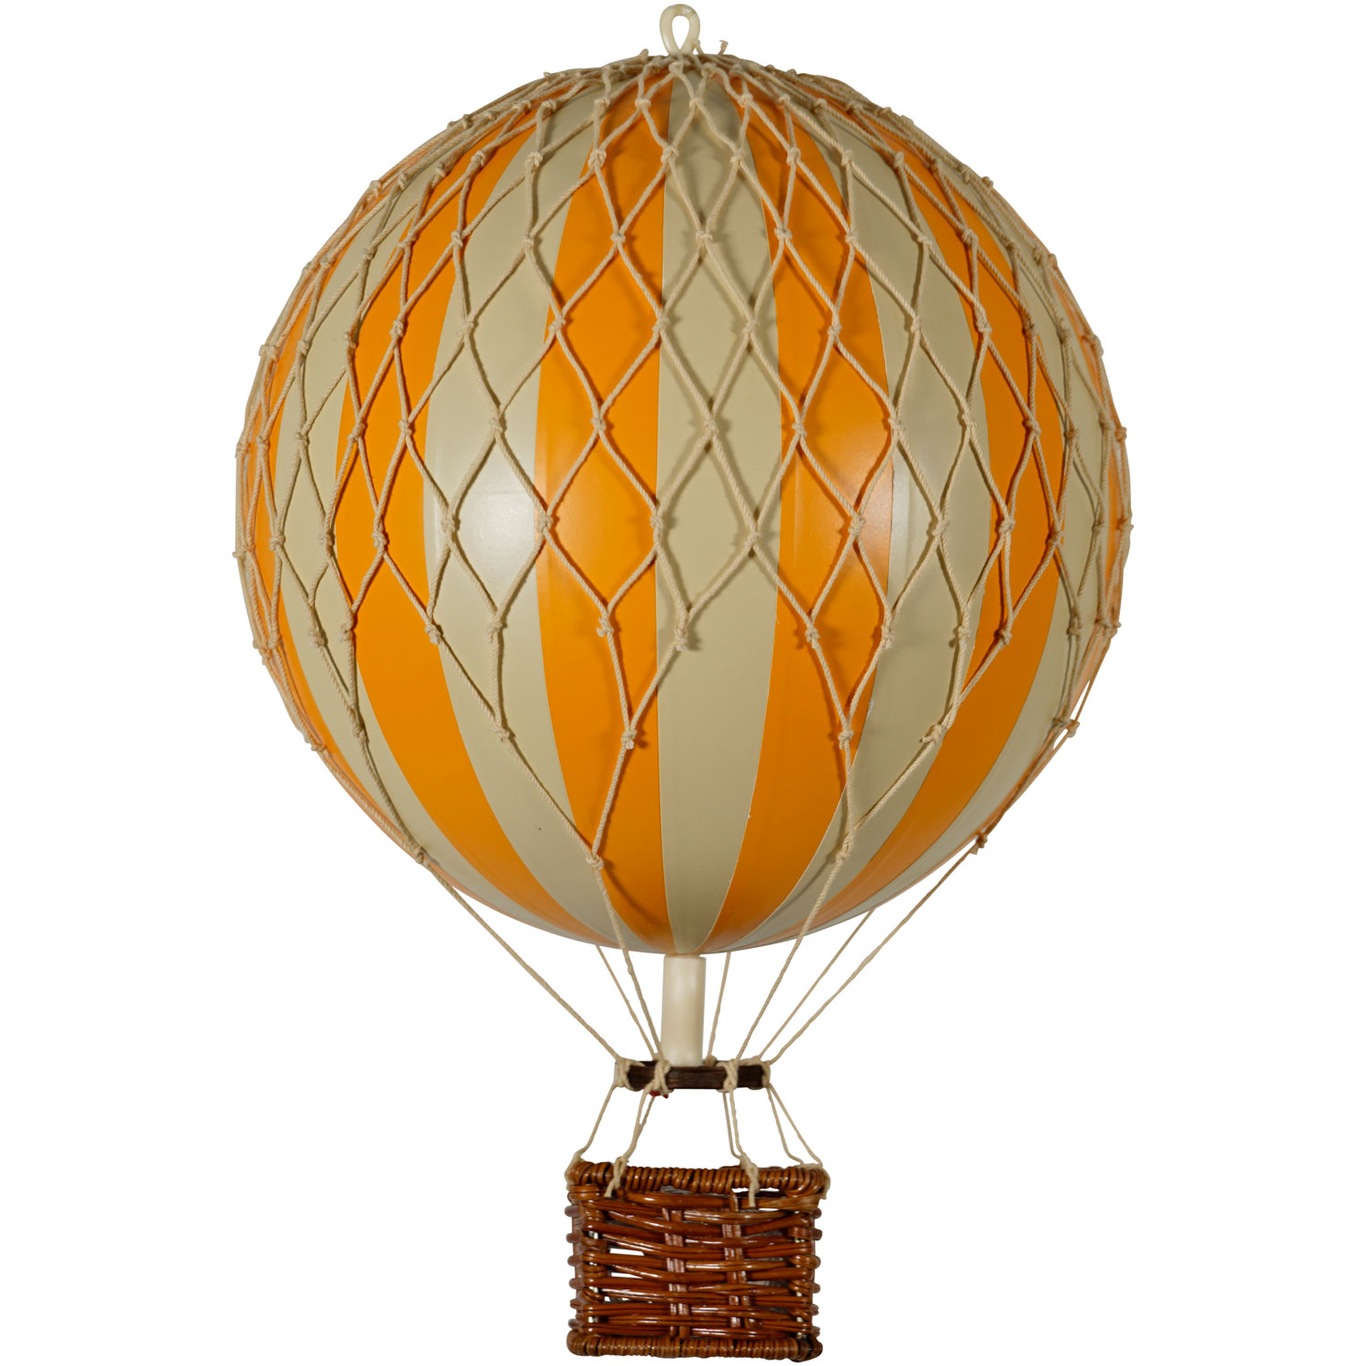 Travels Light Air Balloon 18x30 cm, Orange / Ivory